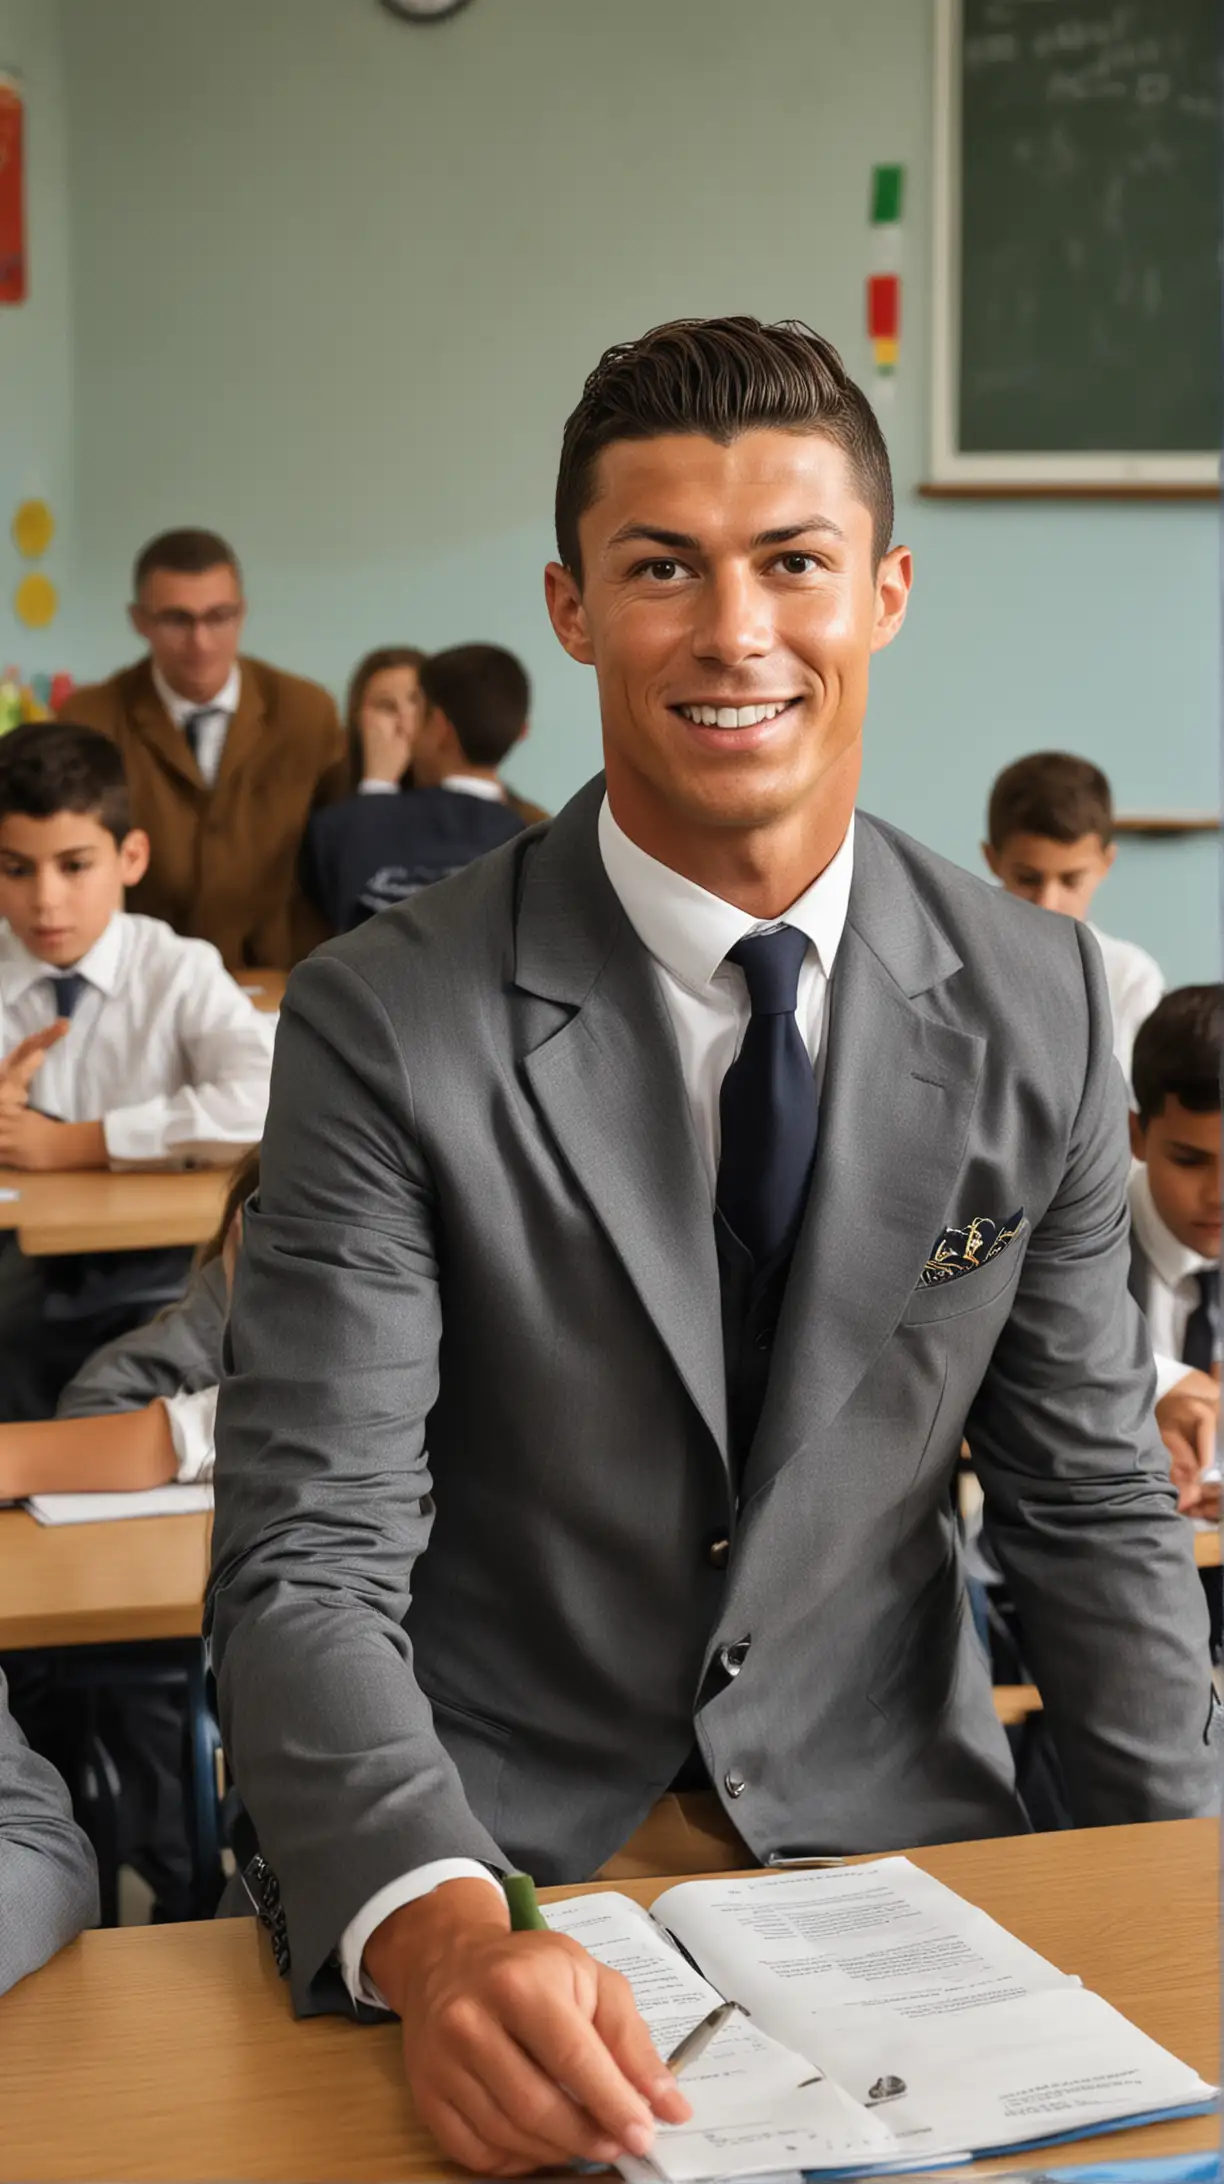 Cristiano Ronaldo as headteacher, kids in class background 